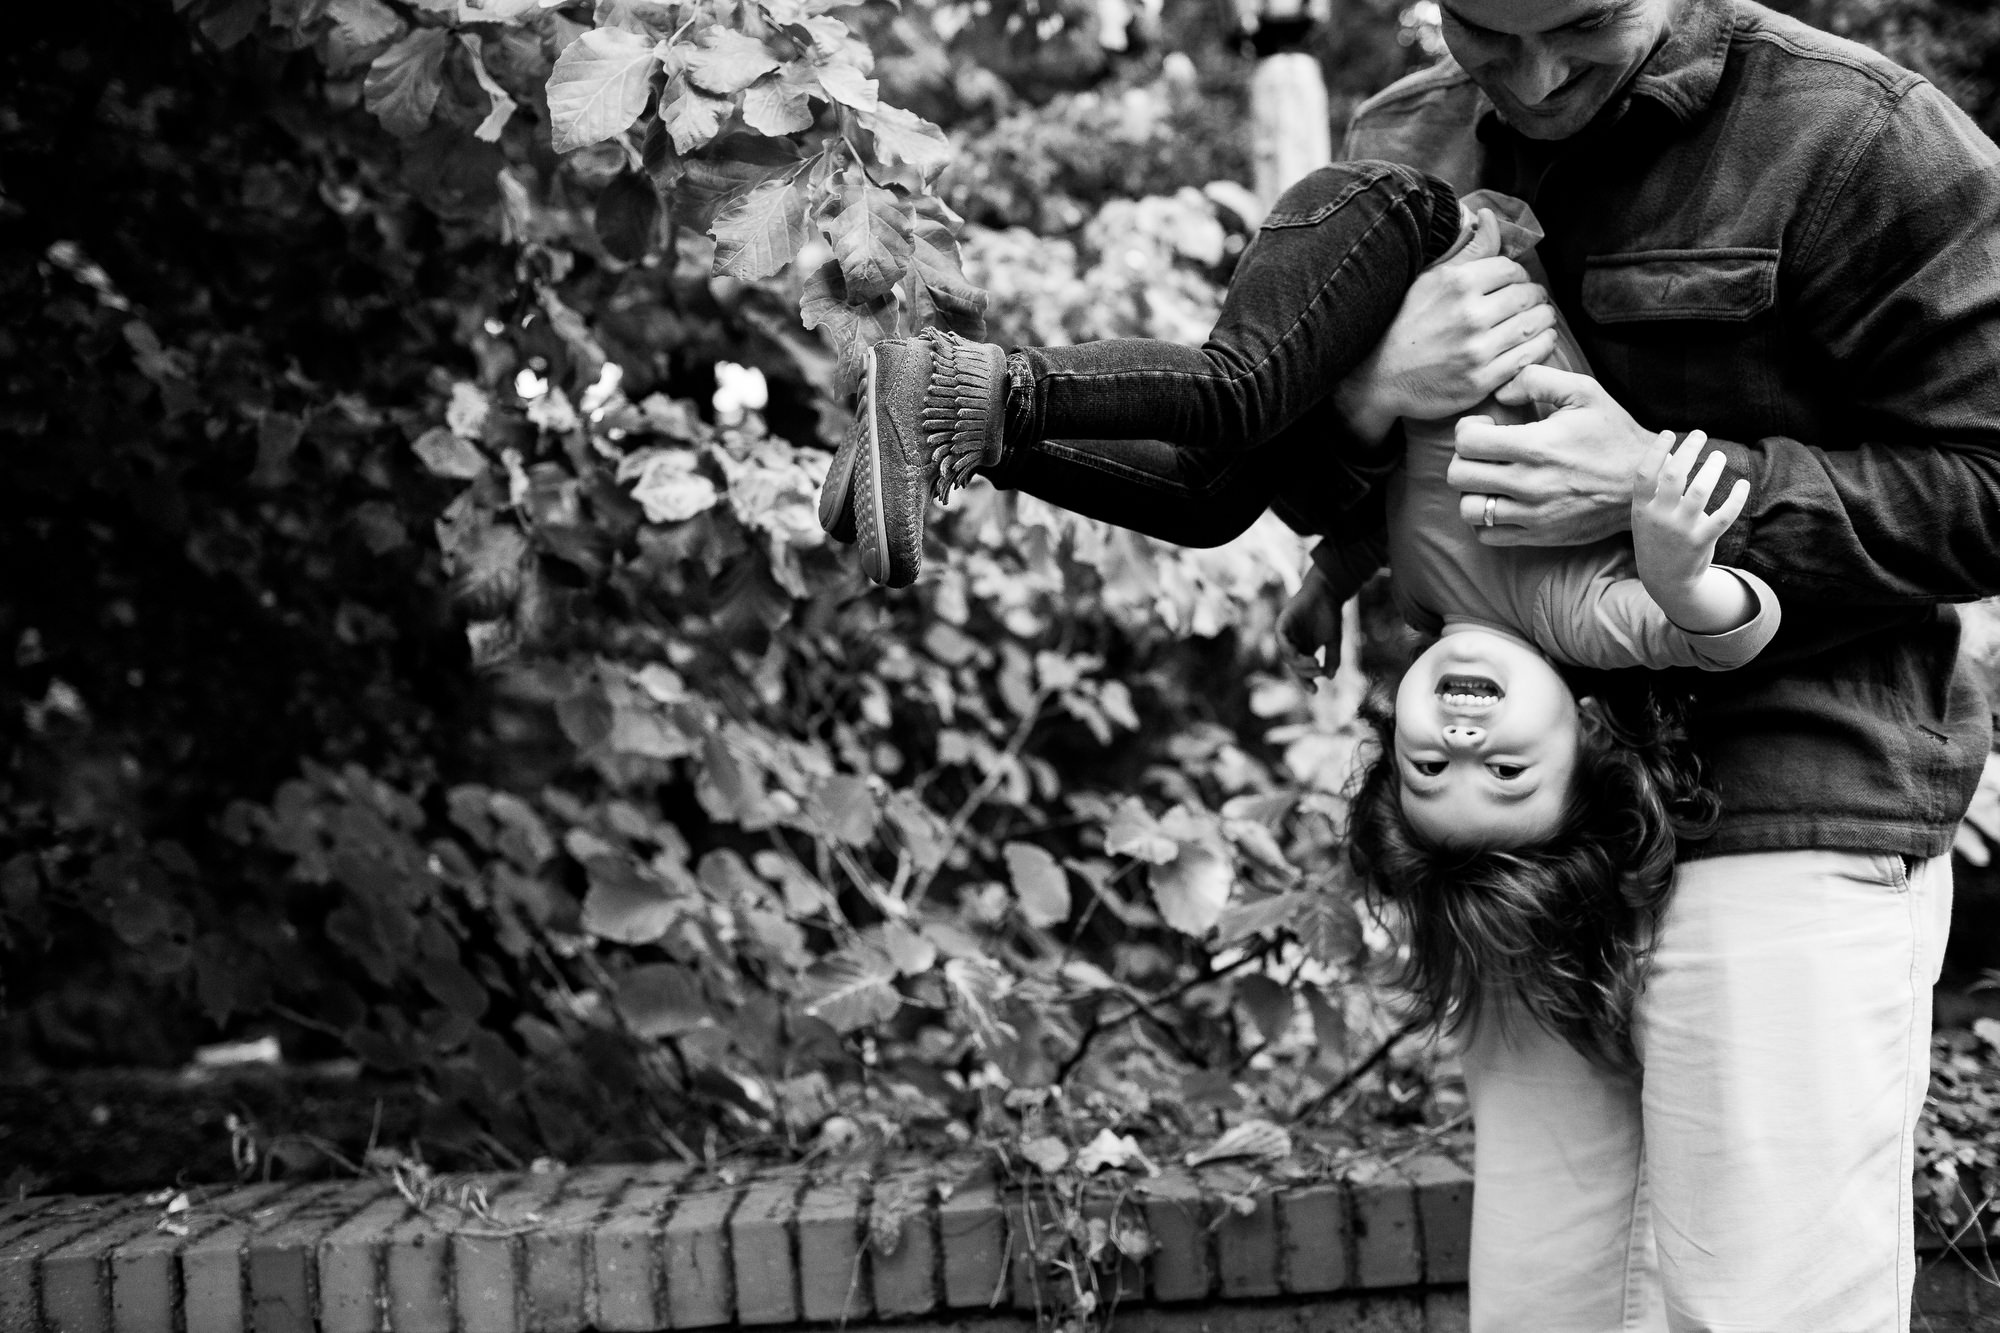 Family photos at the Portland Rose Garden by portrait photographers, Daniel & Lindsay Stark